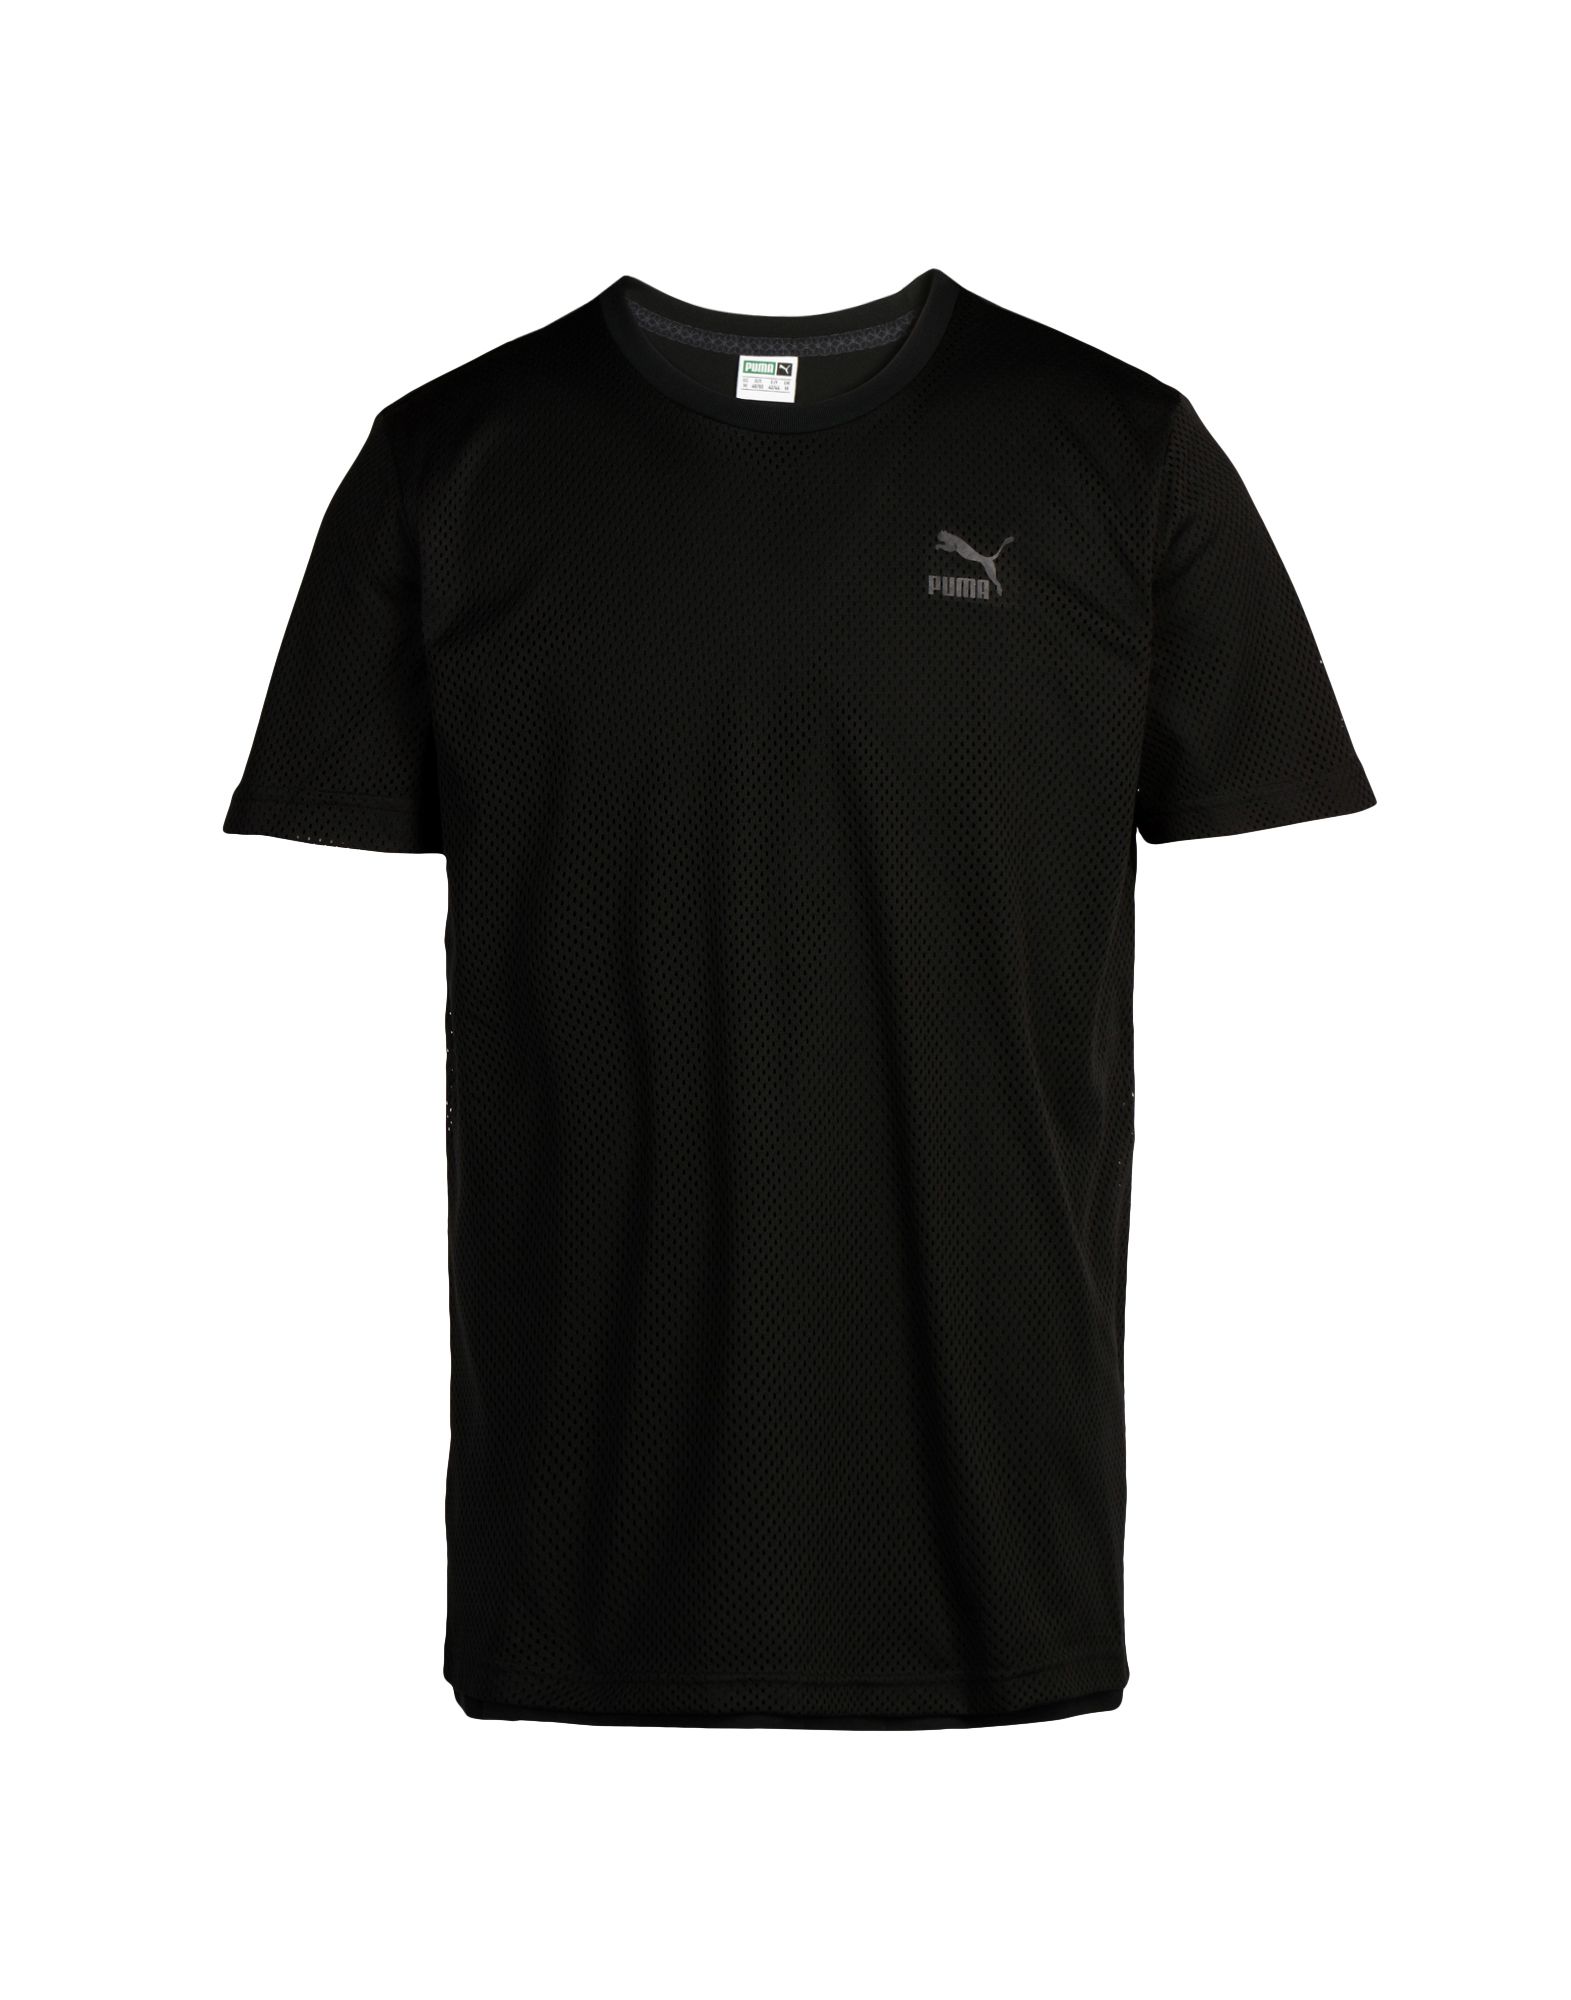 Puma T Shirt Black Sale Up To 66 Discounts